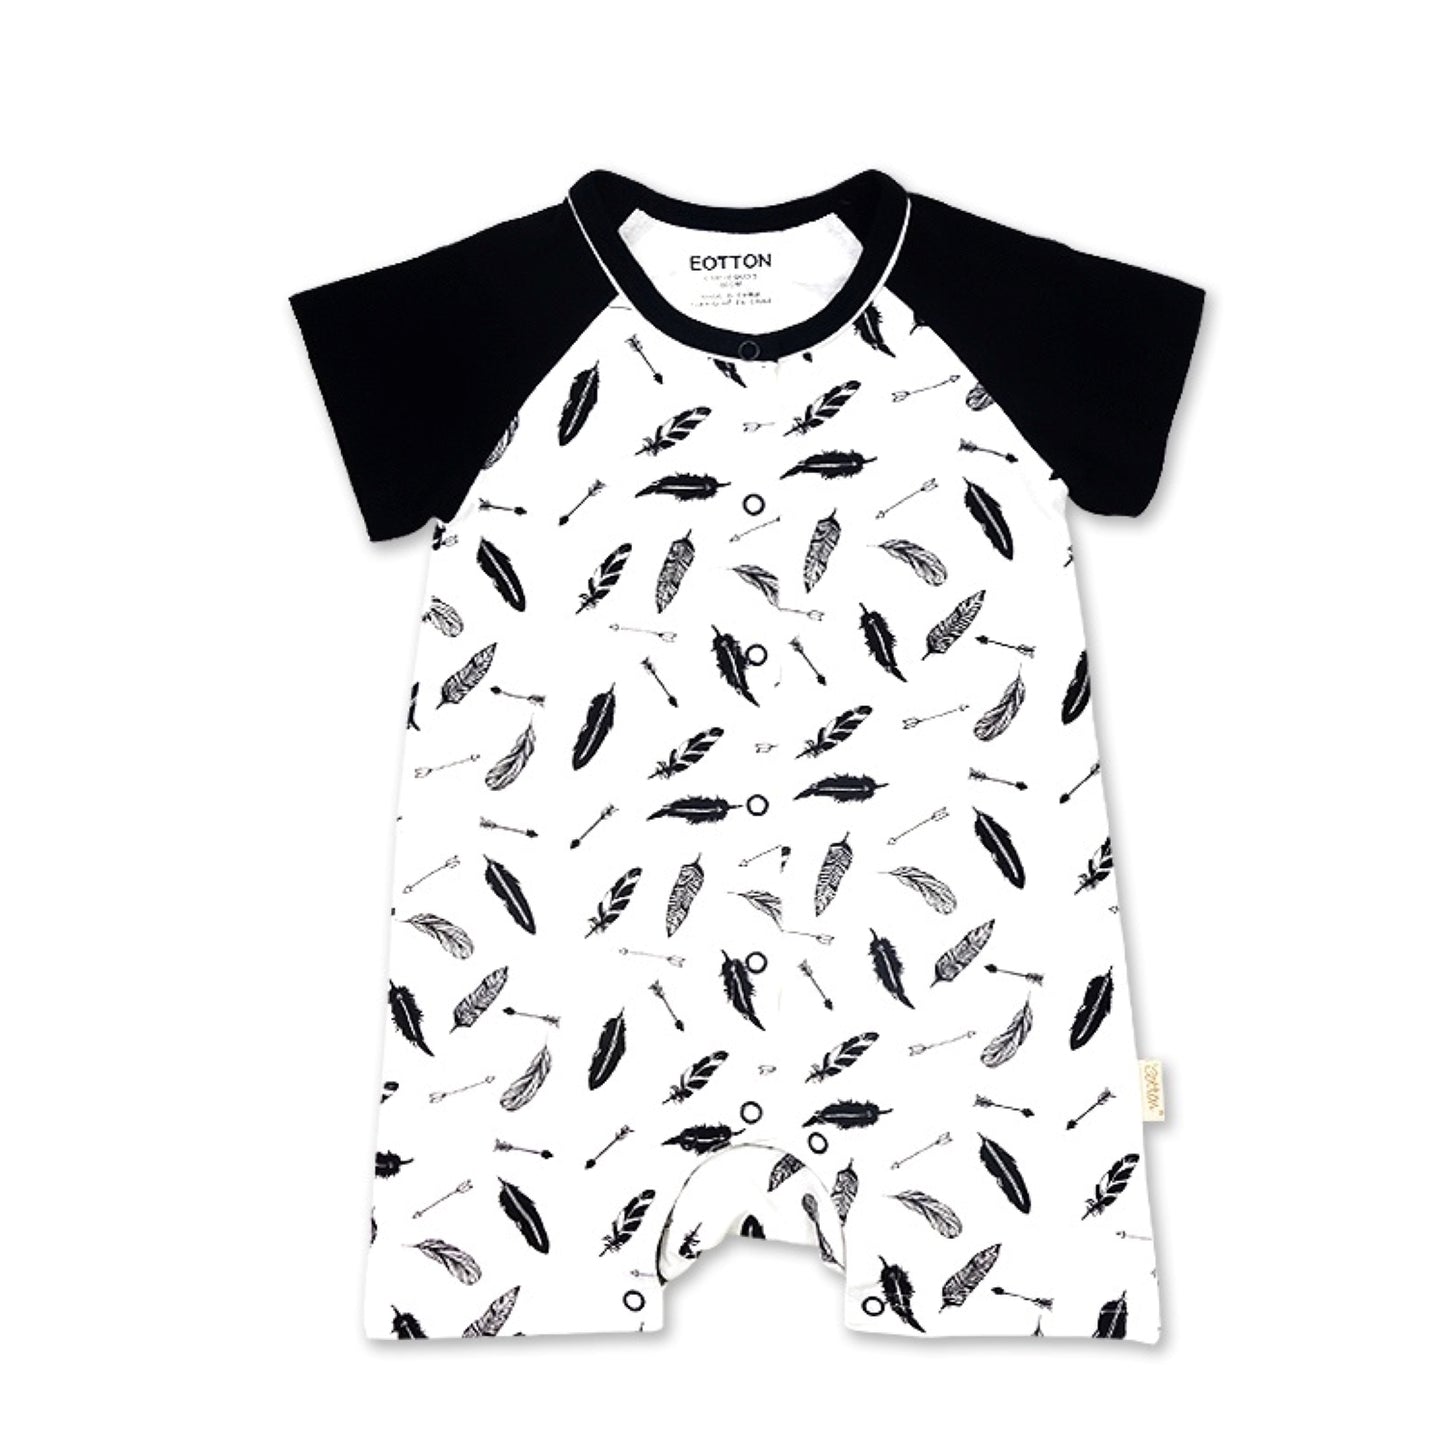 Gender Neutral Infant Clothes: Organic Short Sleeve Romper - Black & White